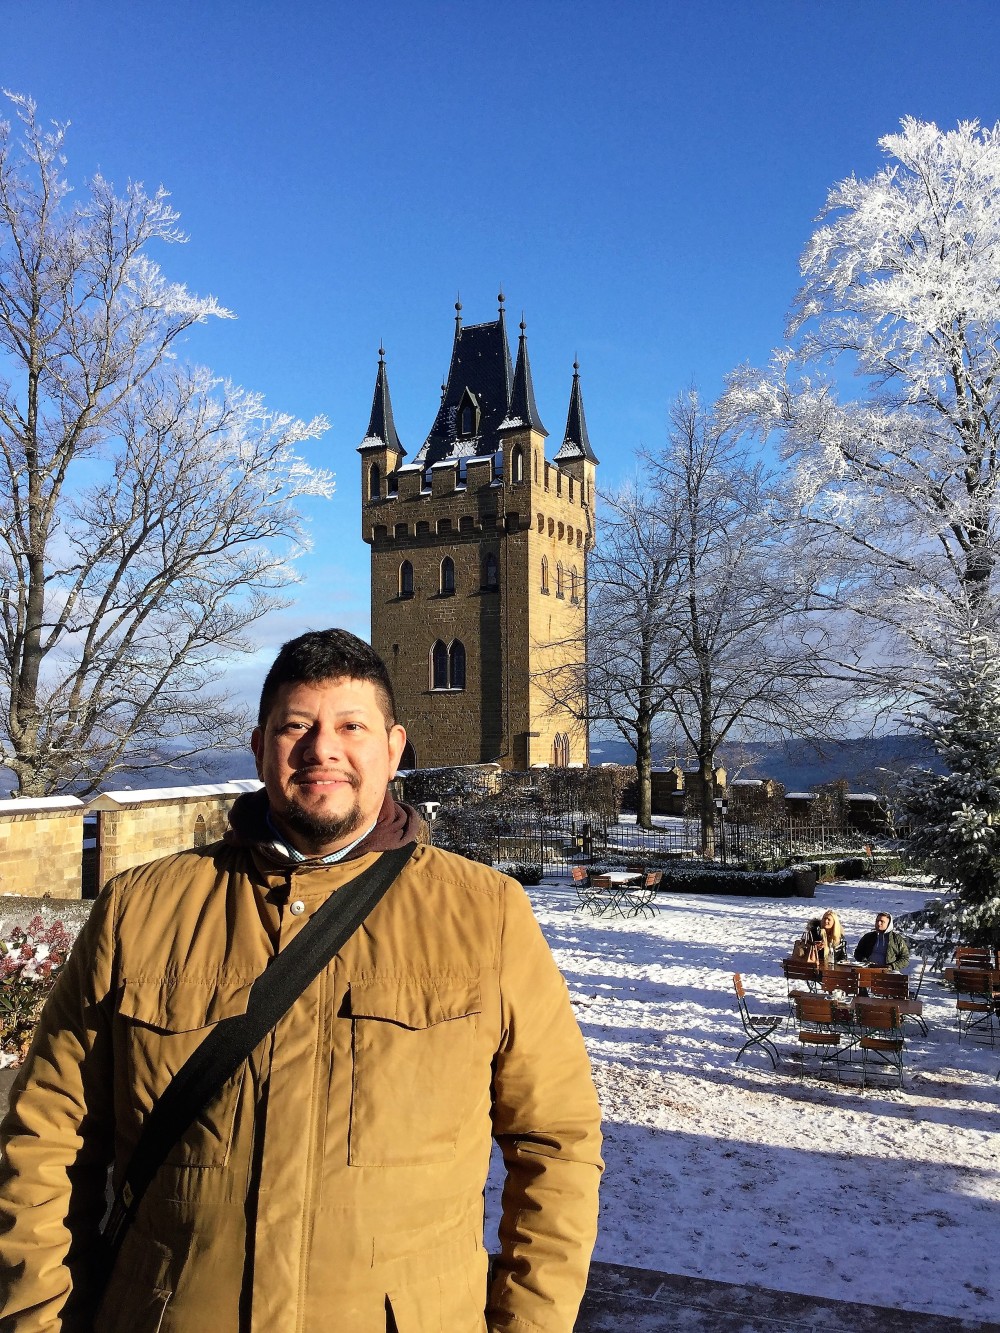 Castillo-de-Hohenzollern-donviajon-viajando-con-pasion-turismo-cultural-de-invierno-baden-wurttemberg-alemania